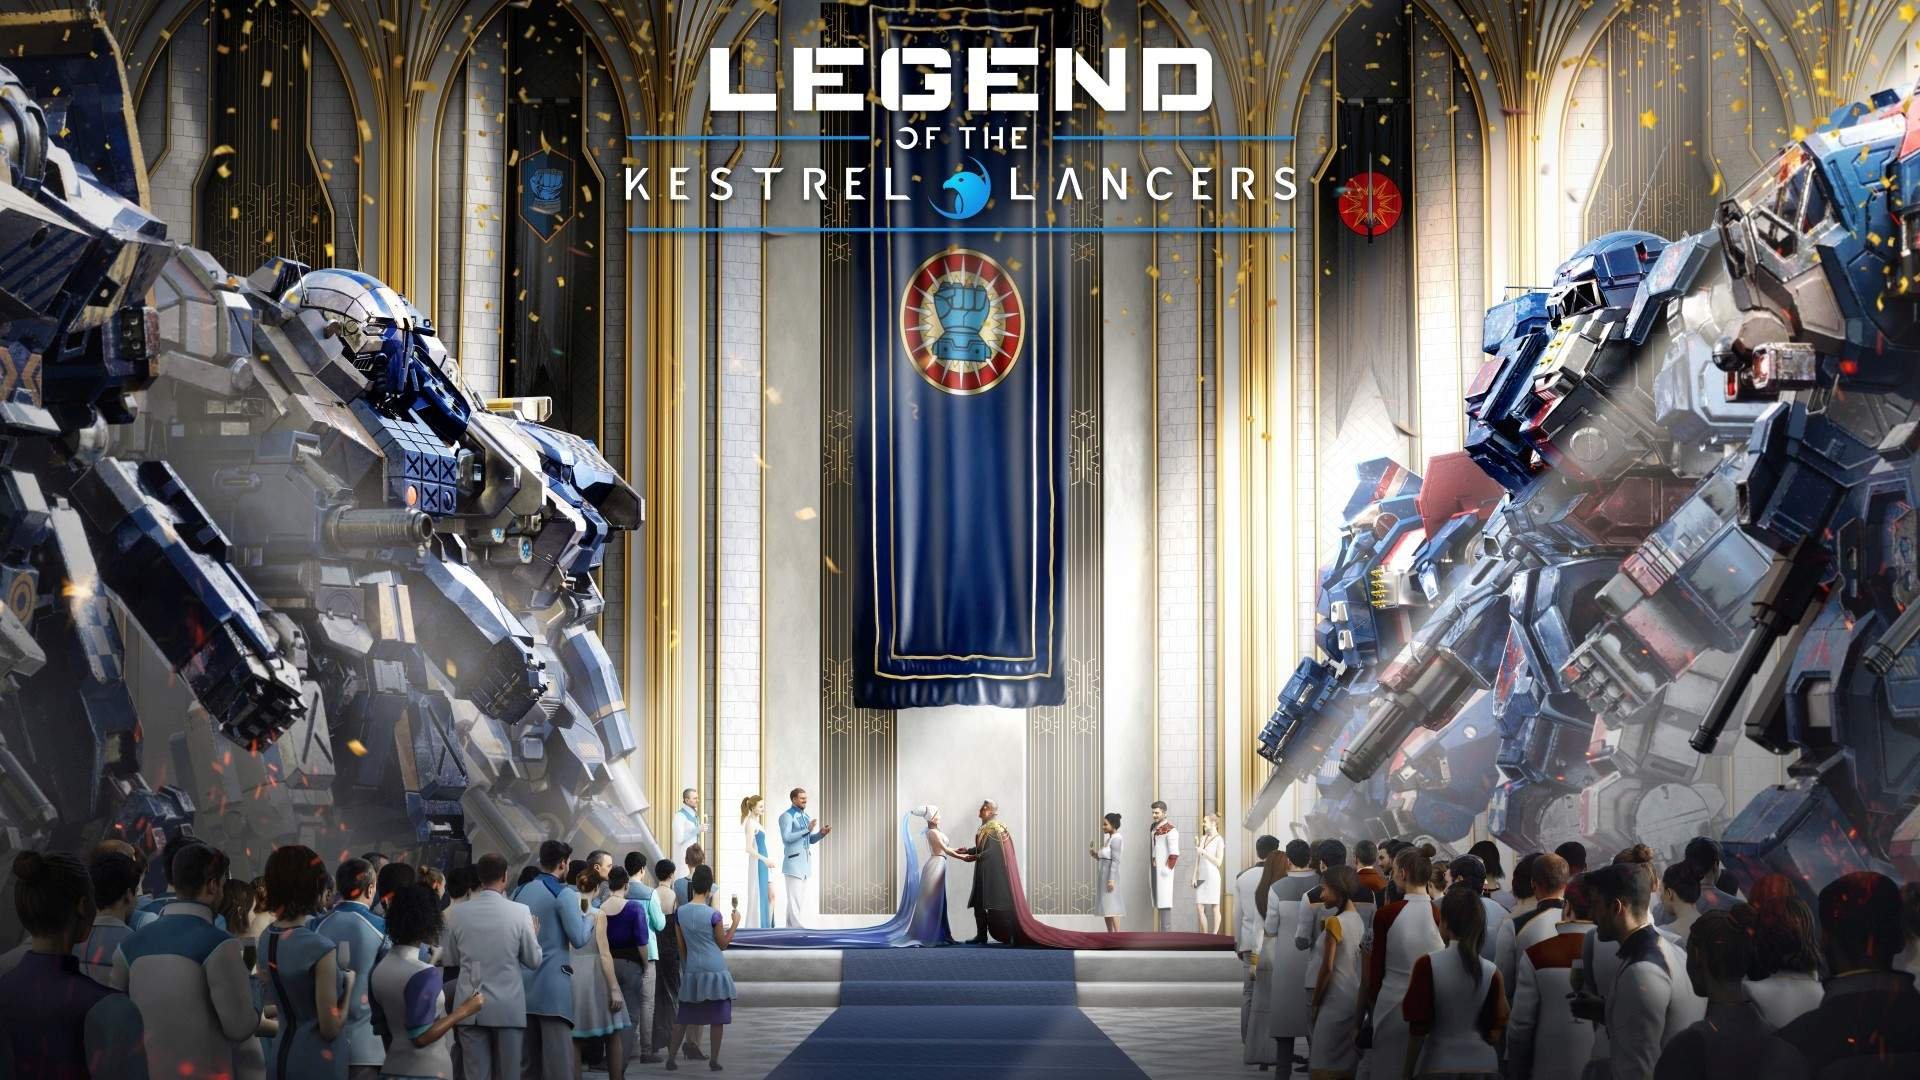 MechWarrior 5: Legend of the Kestrel Lancers Launches September 23rd